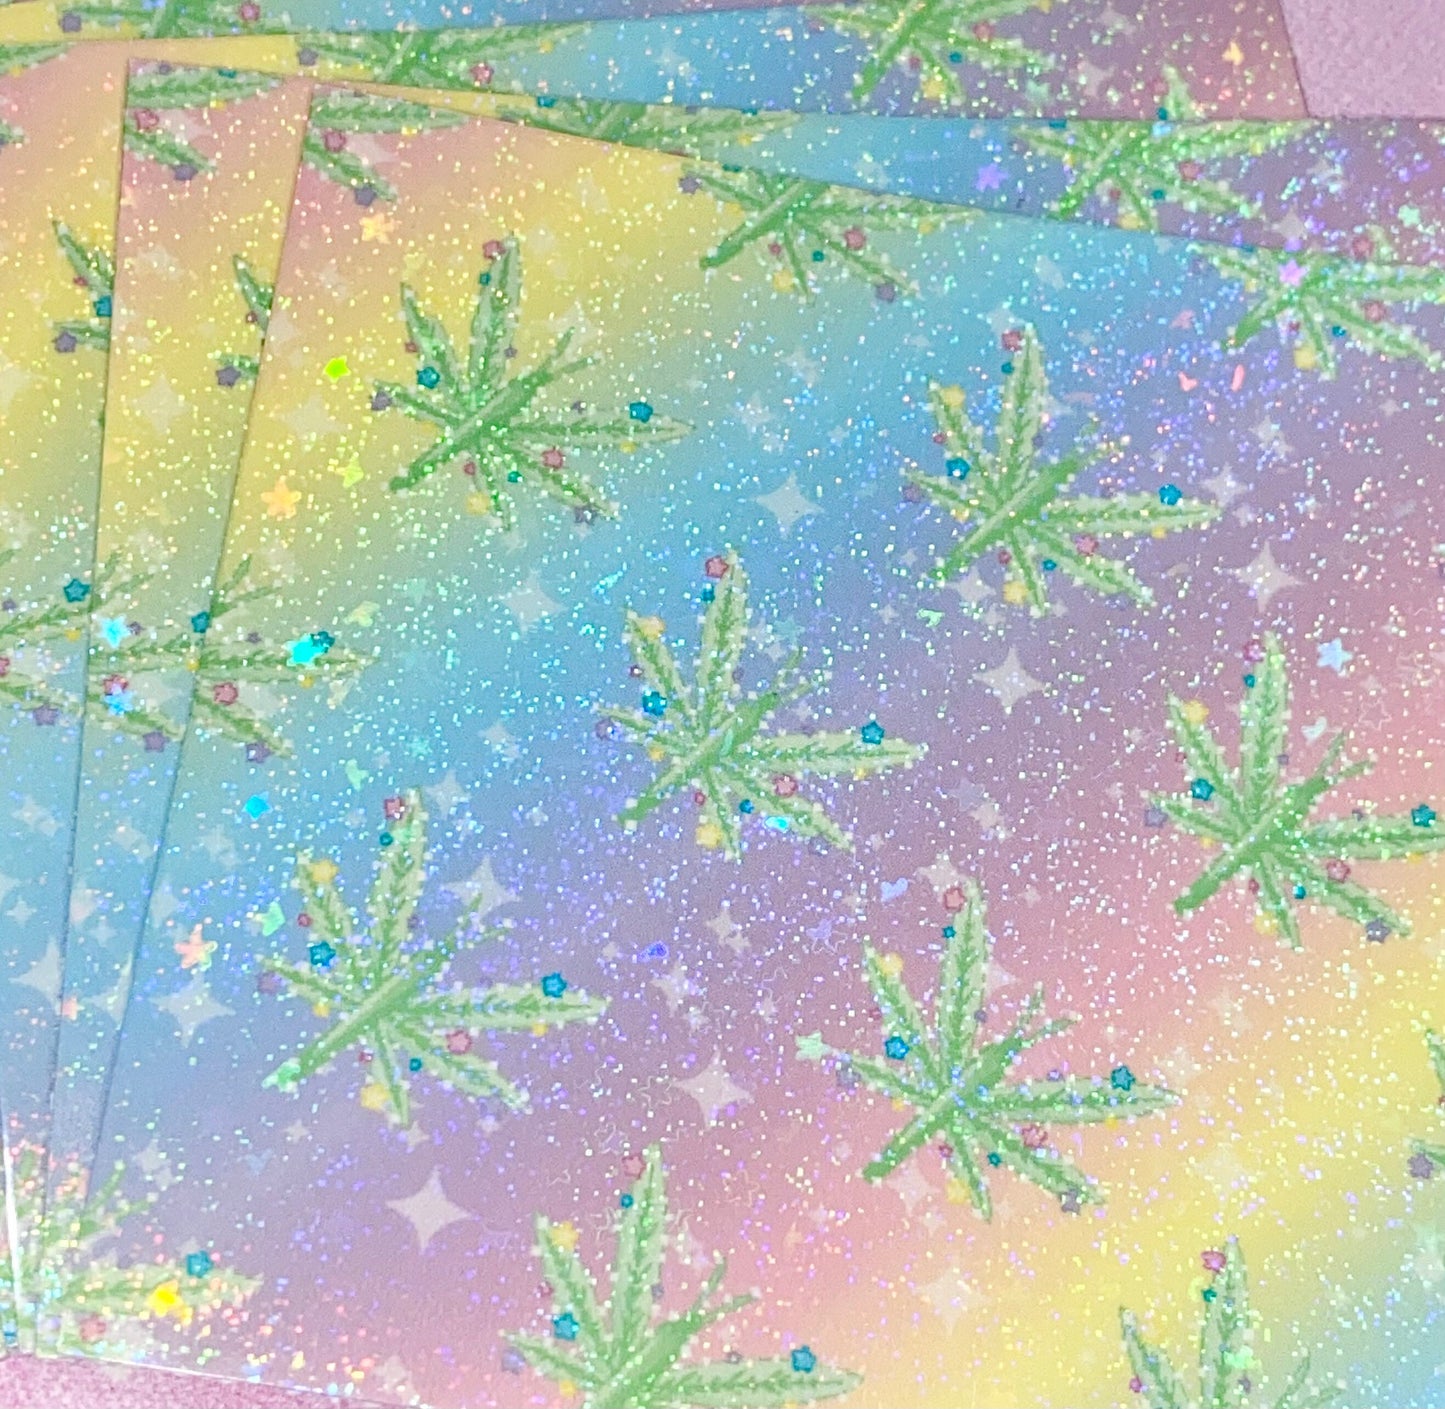 Canna-Fly Lighter Wrap | cannabis lighter wrap, Kawaii lighter wraps, lighter wraps, Cannabis art, weed stickers, Kawaii, stickers